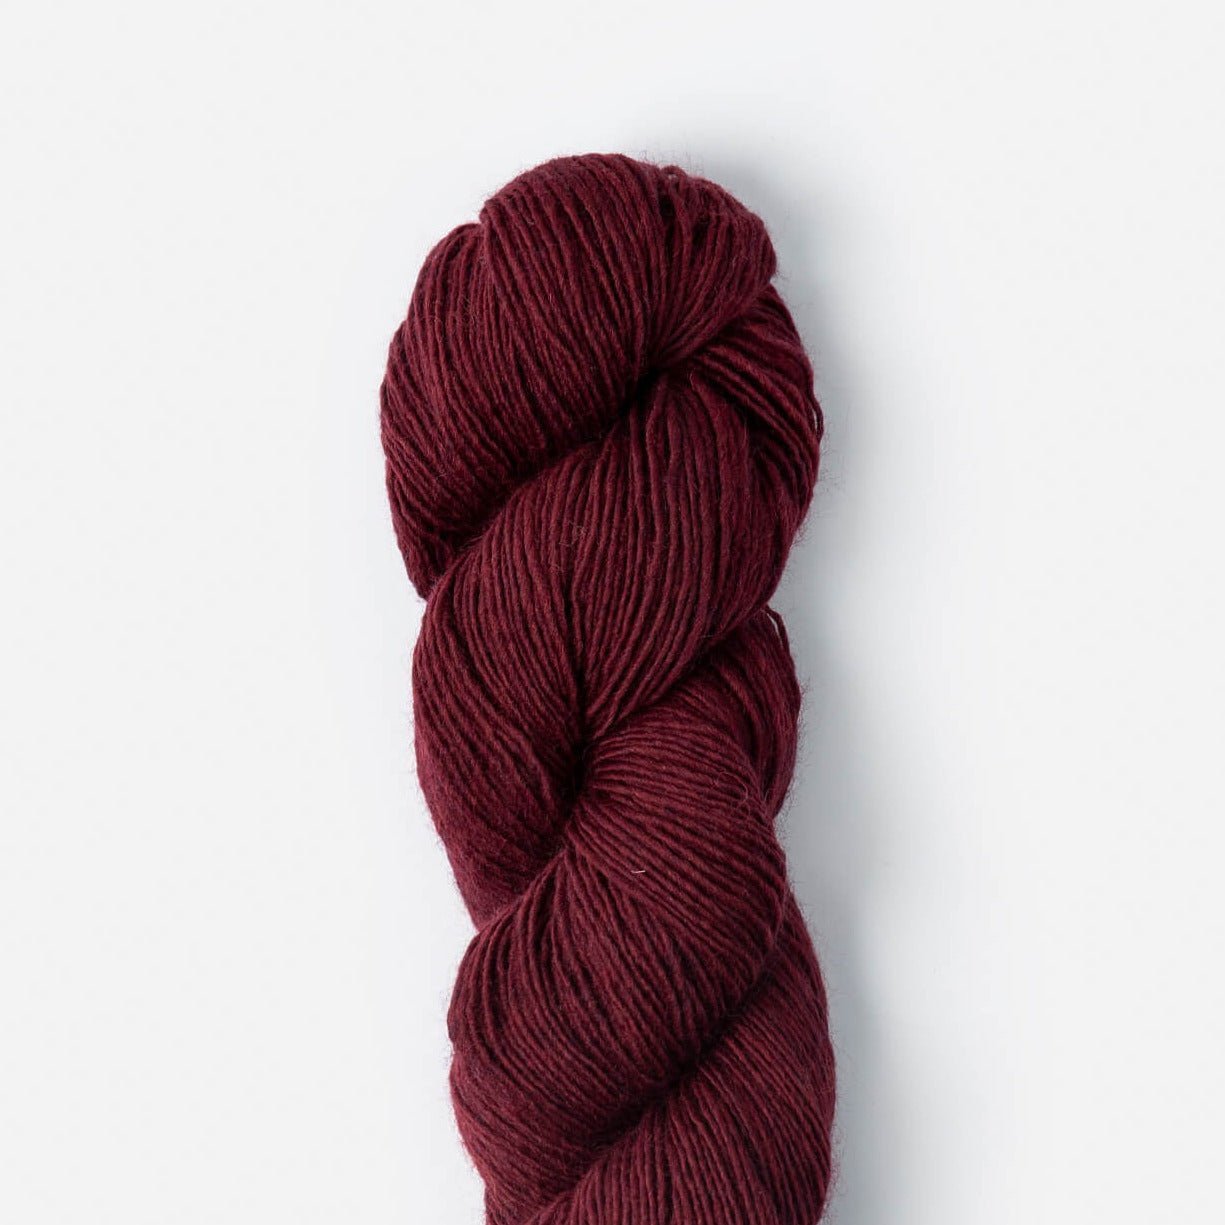 Tivoli Shawl Knitting Kit - Mary Pranica - 2310 Cranberry Compote - The Little Yarn Store